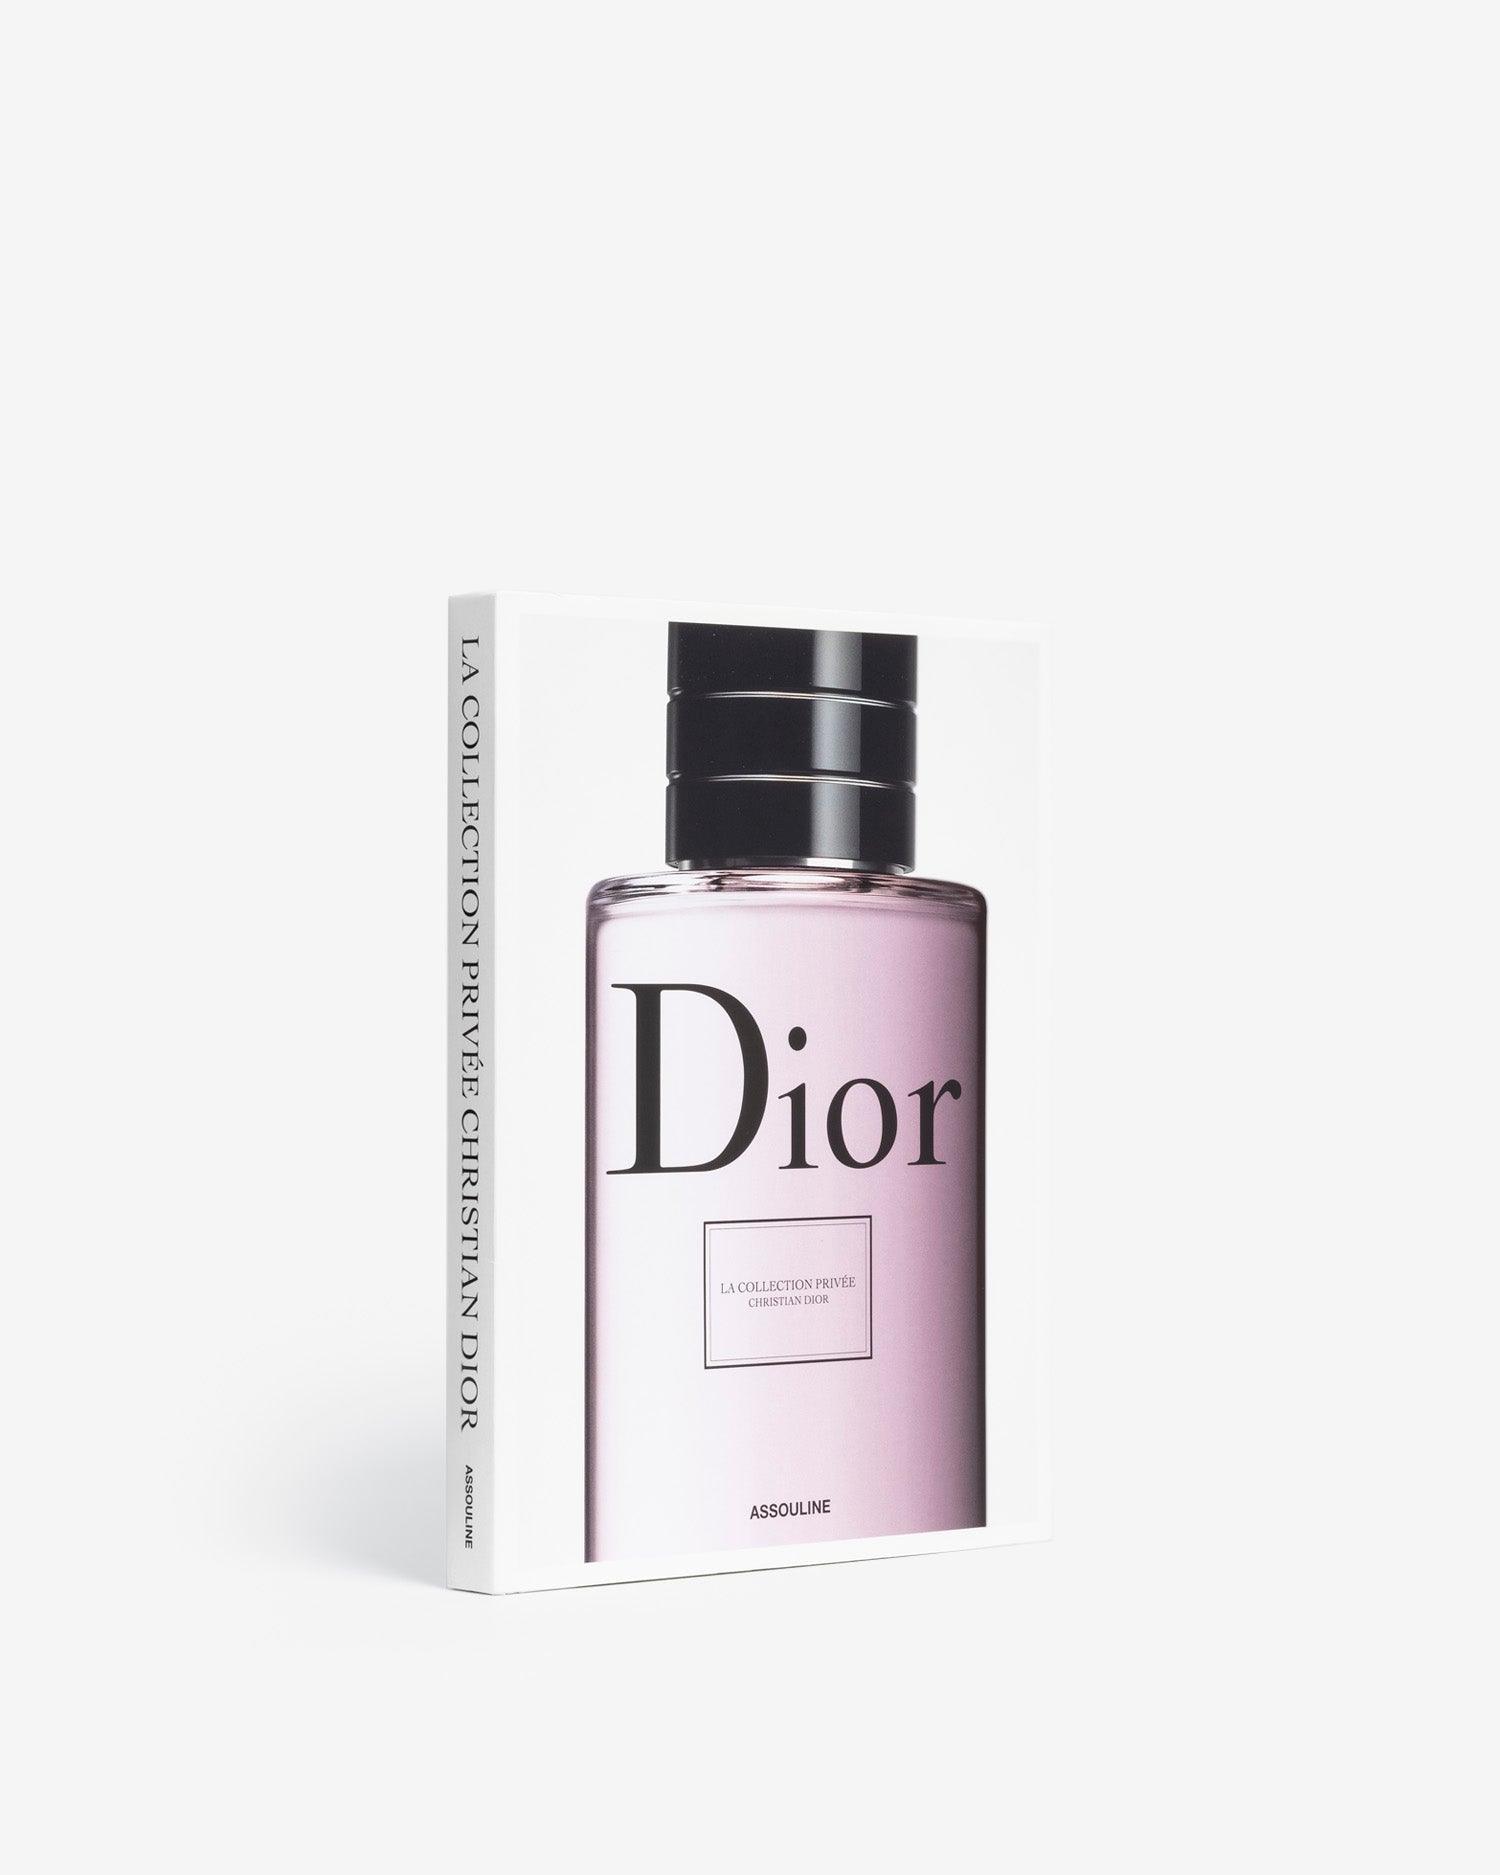 La Collection Privee Christian Dior Parfum book | ASSOULINE